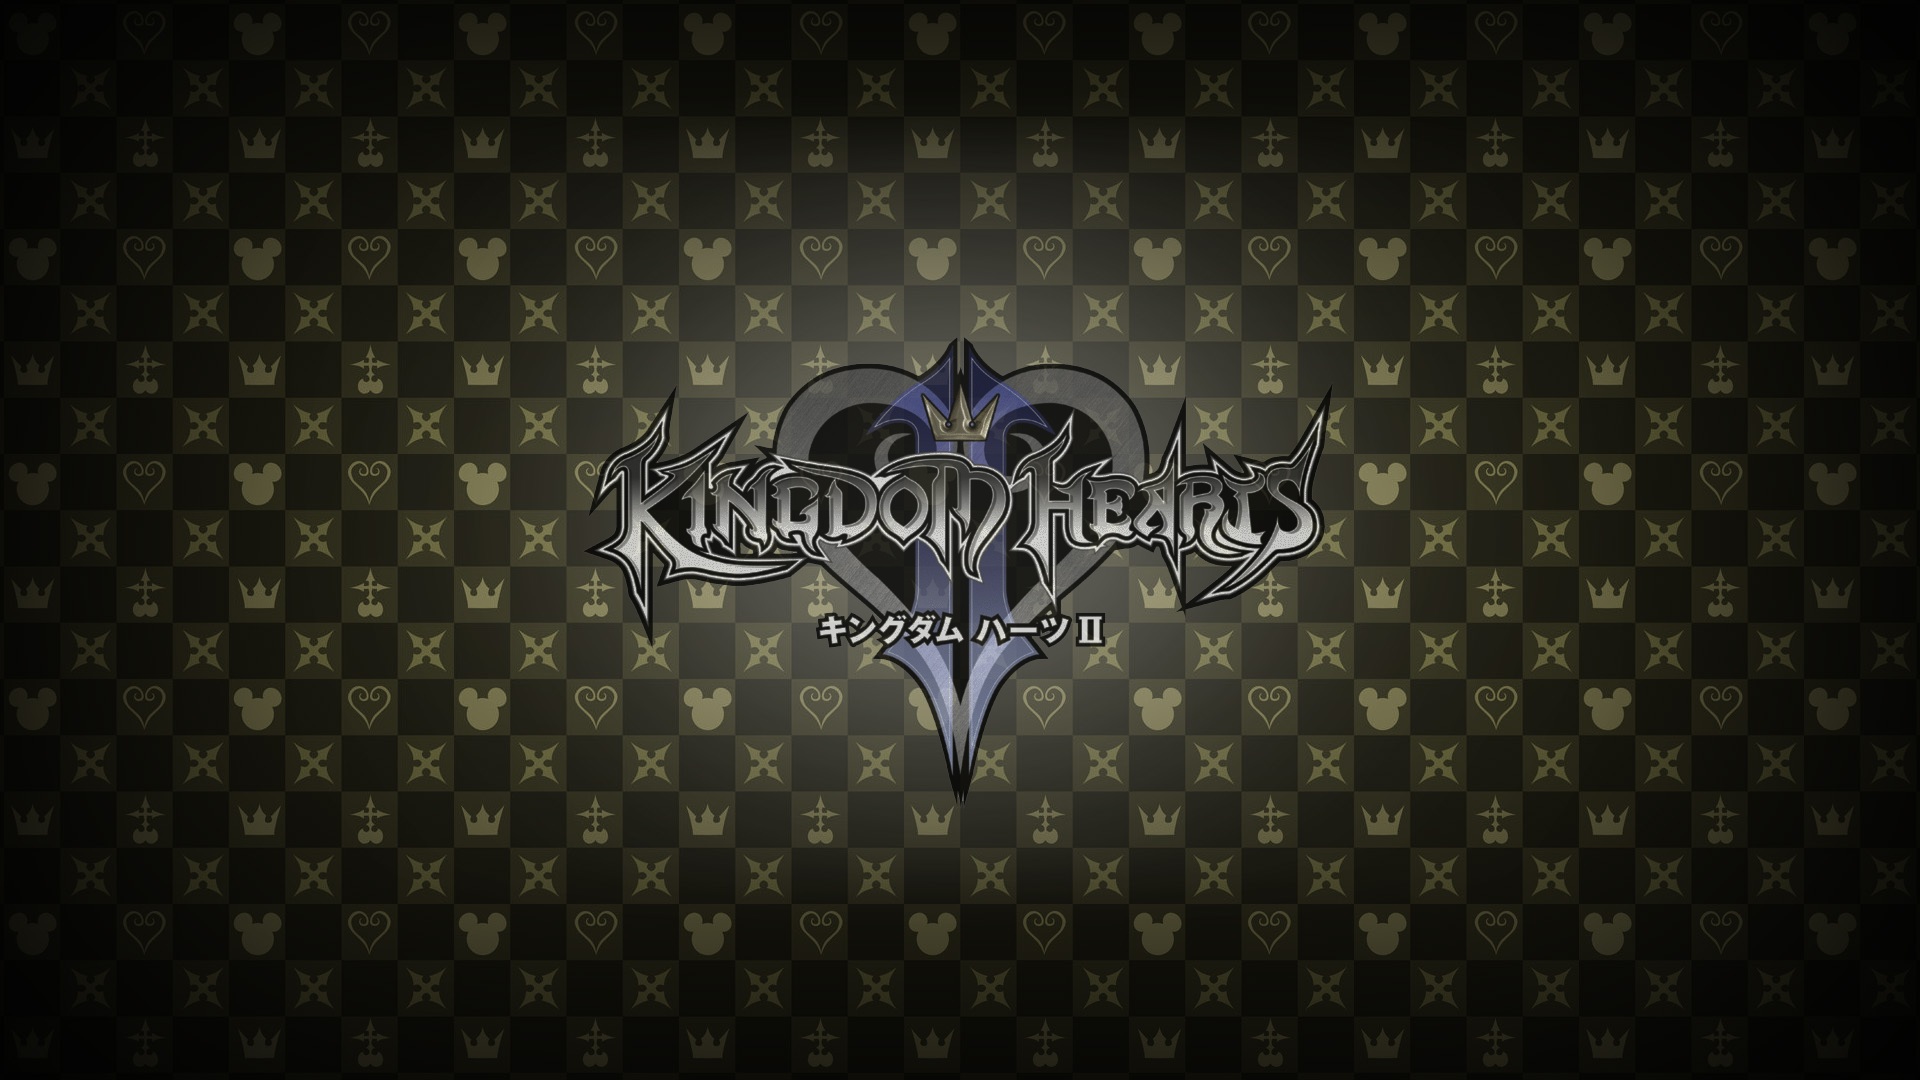 видеоигры, Kingdom Hearts - обои на рабочий стол